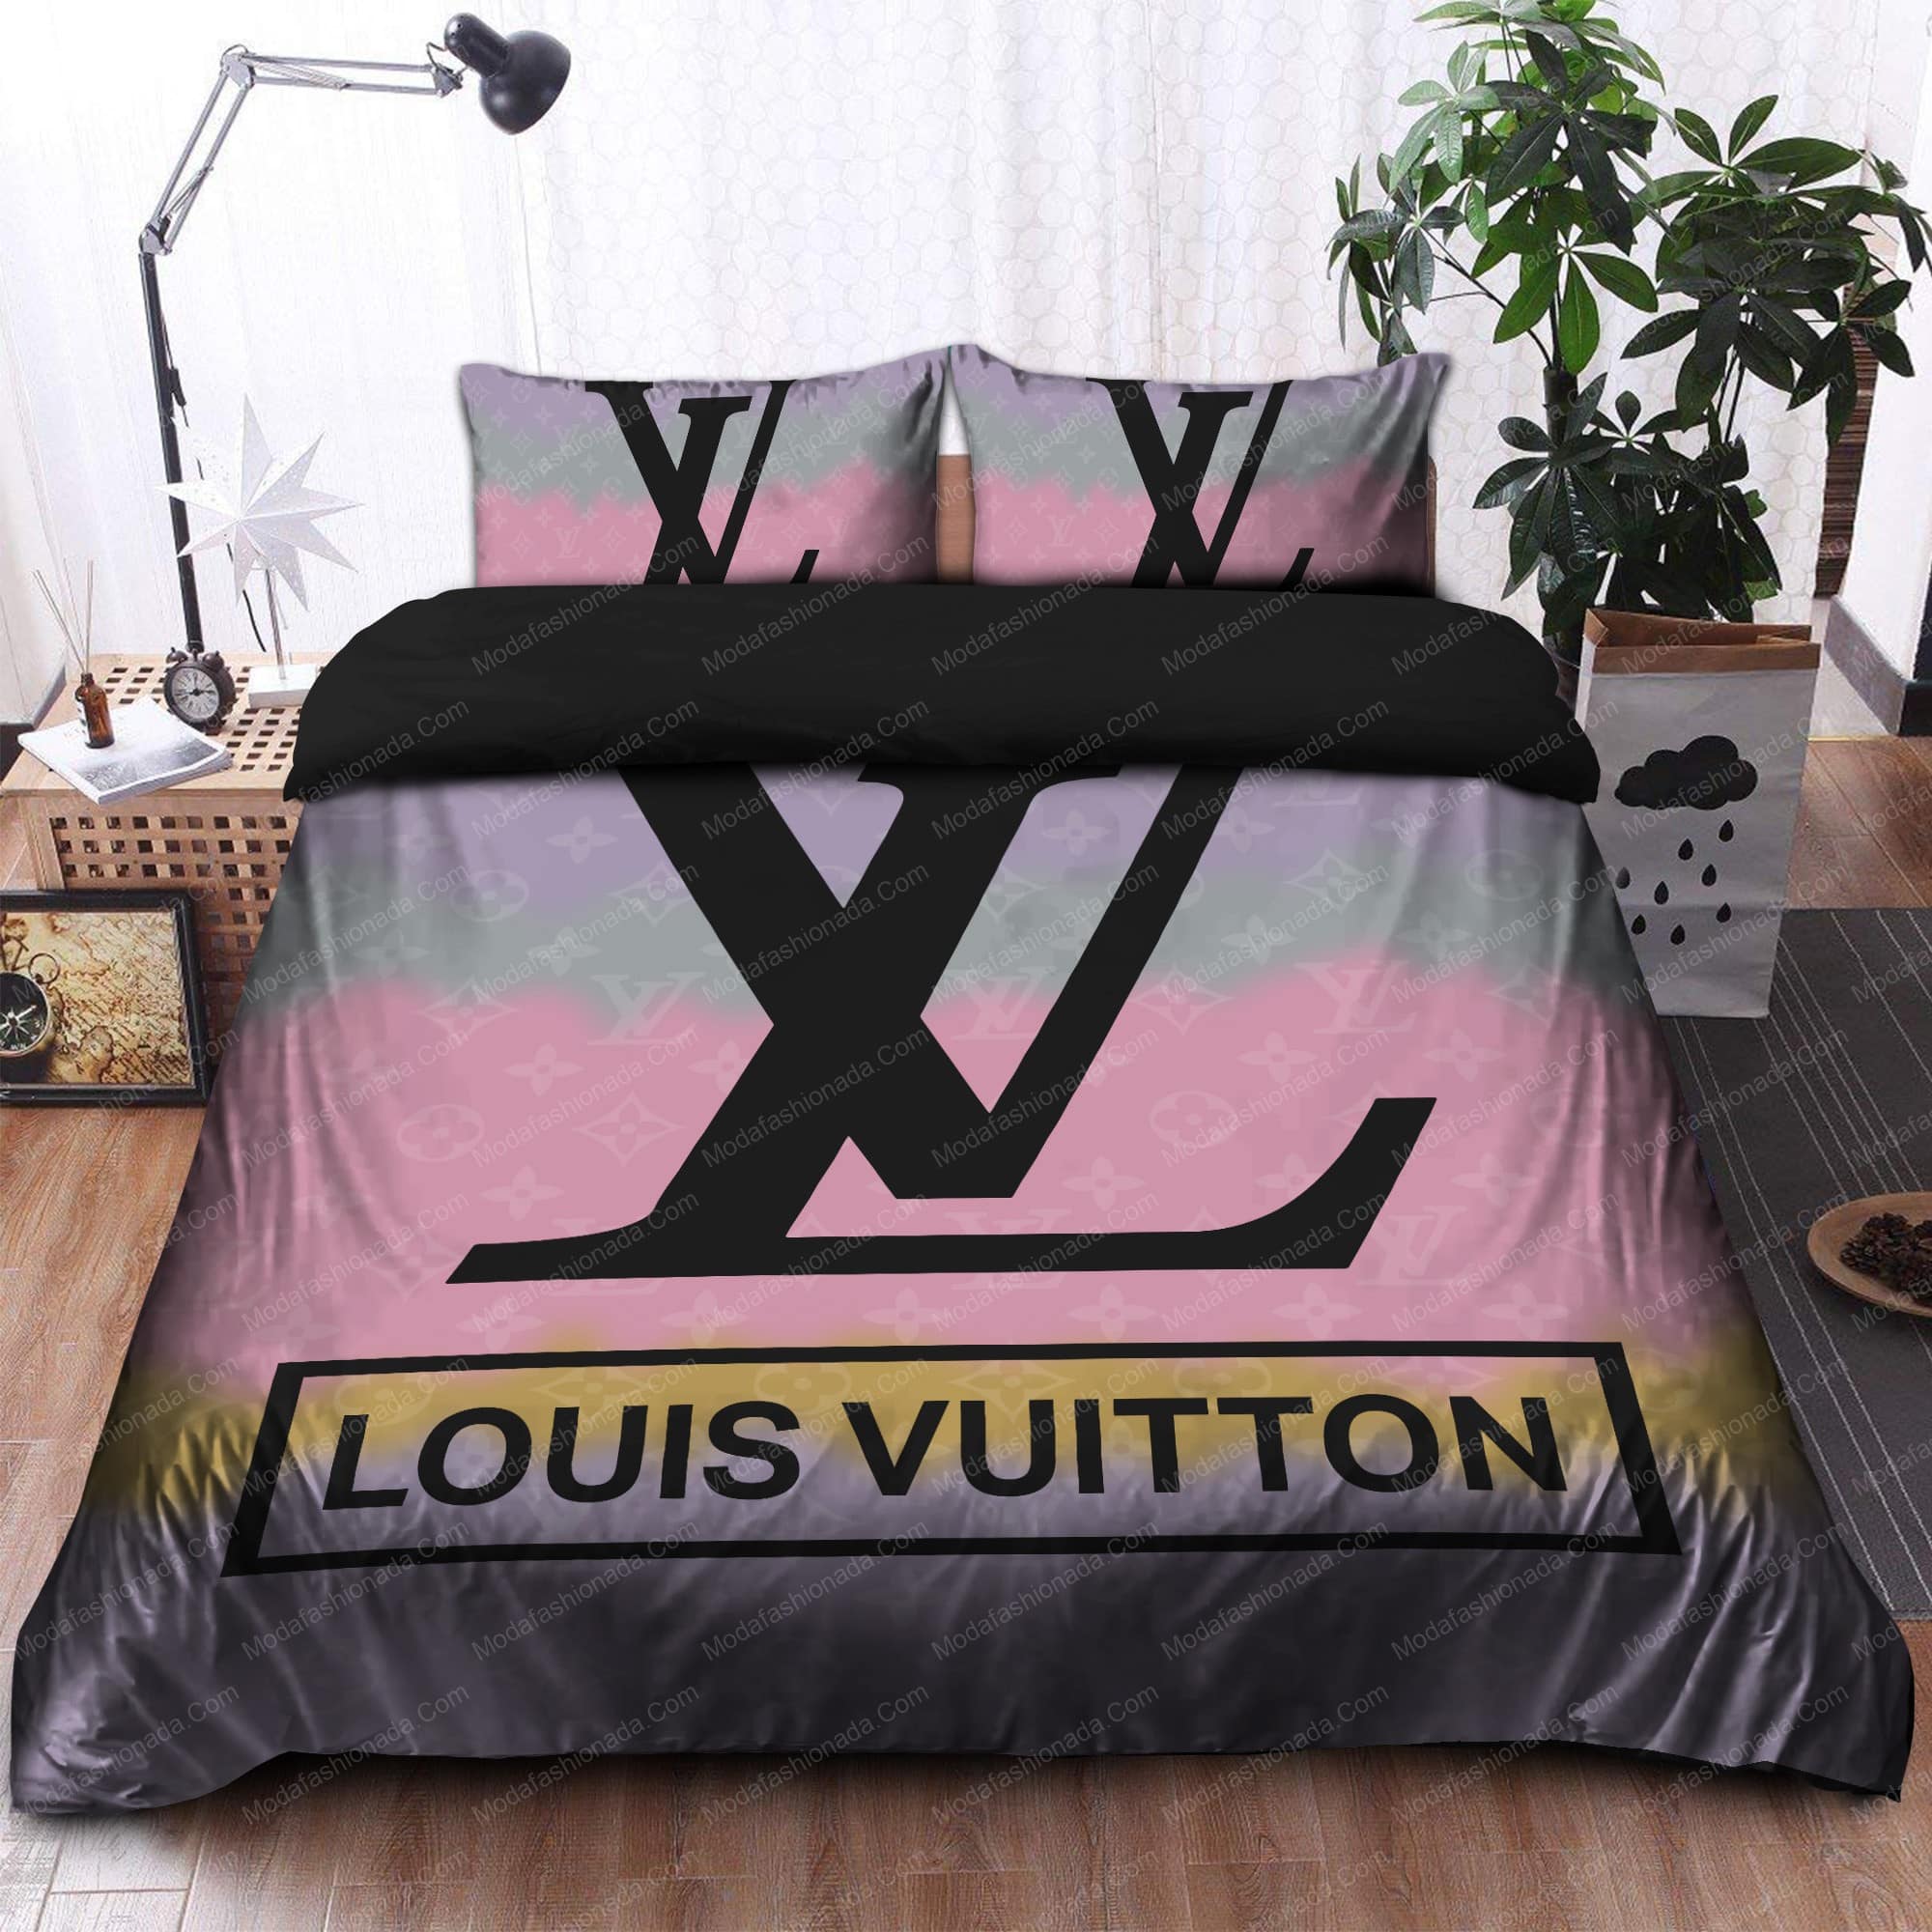 Louis Vuitton Bedding Sets Duvet Cover Luxury Brand Bedroom Sets